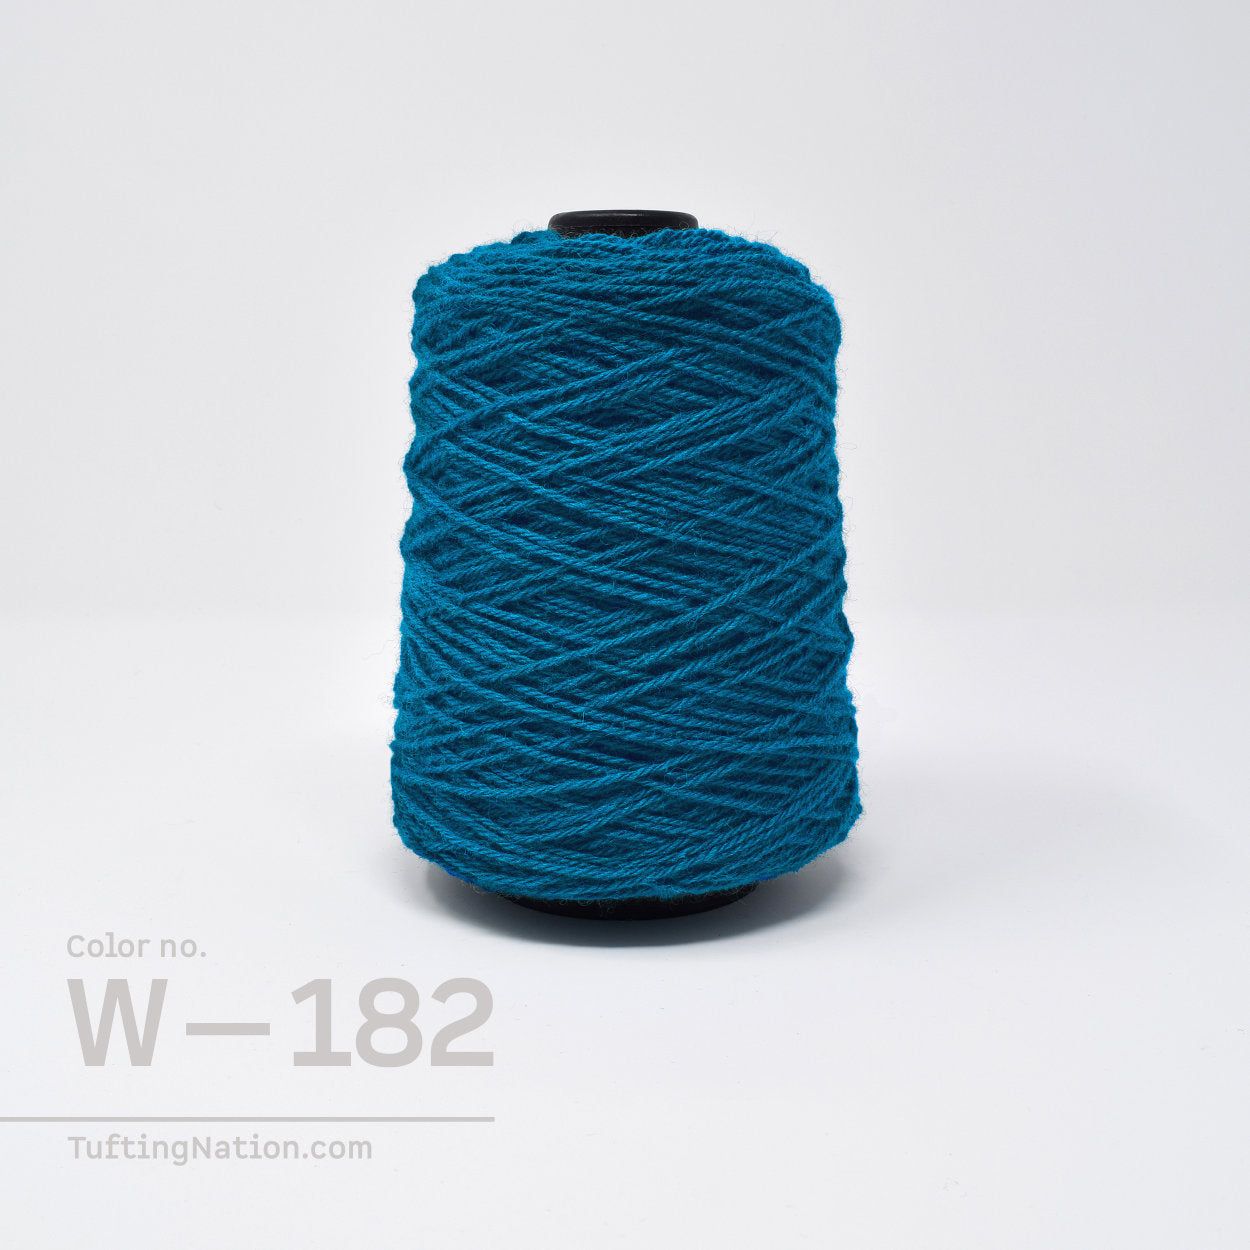 Blue Rug Yarn for Tufting Gun, Weaving Loom and Punch Needle | TuftingNation